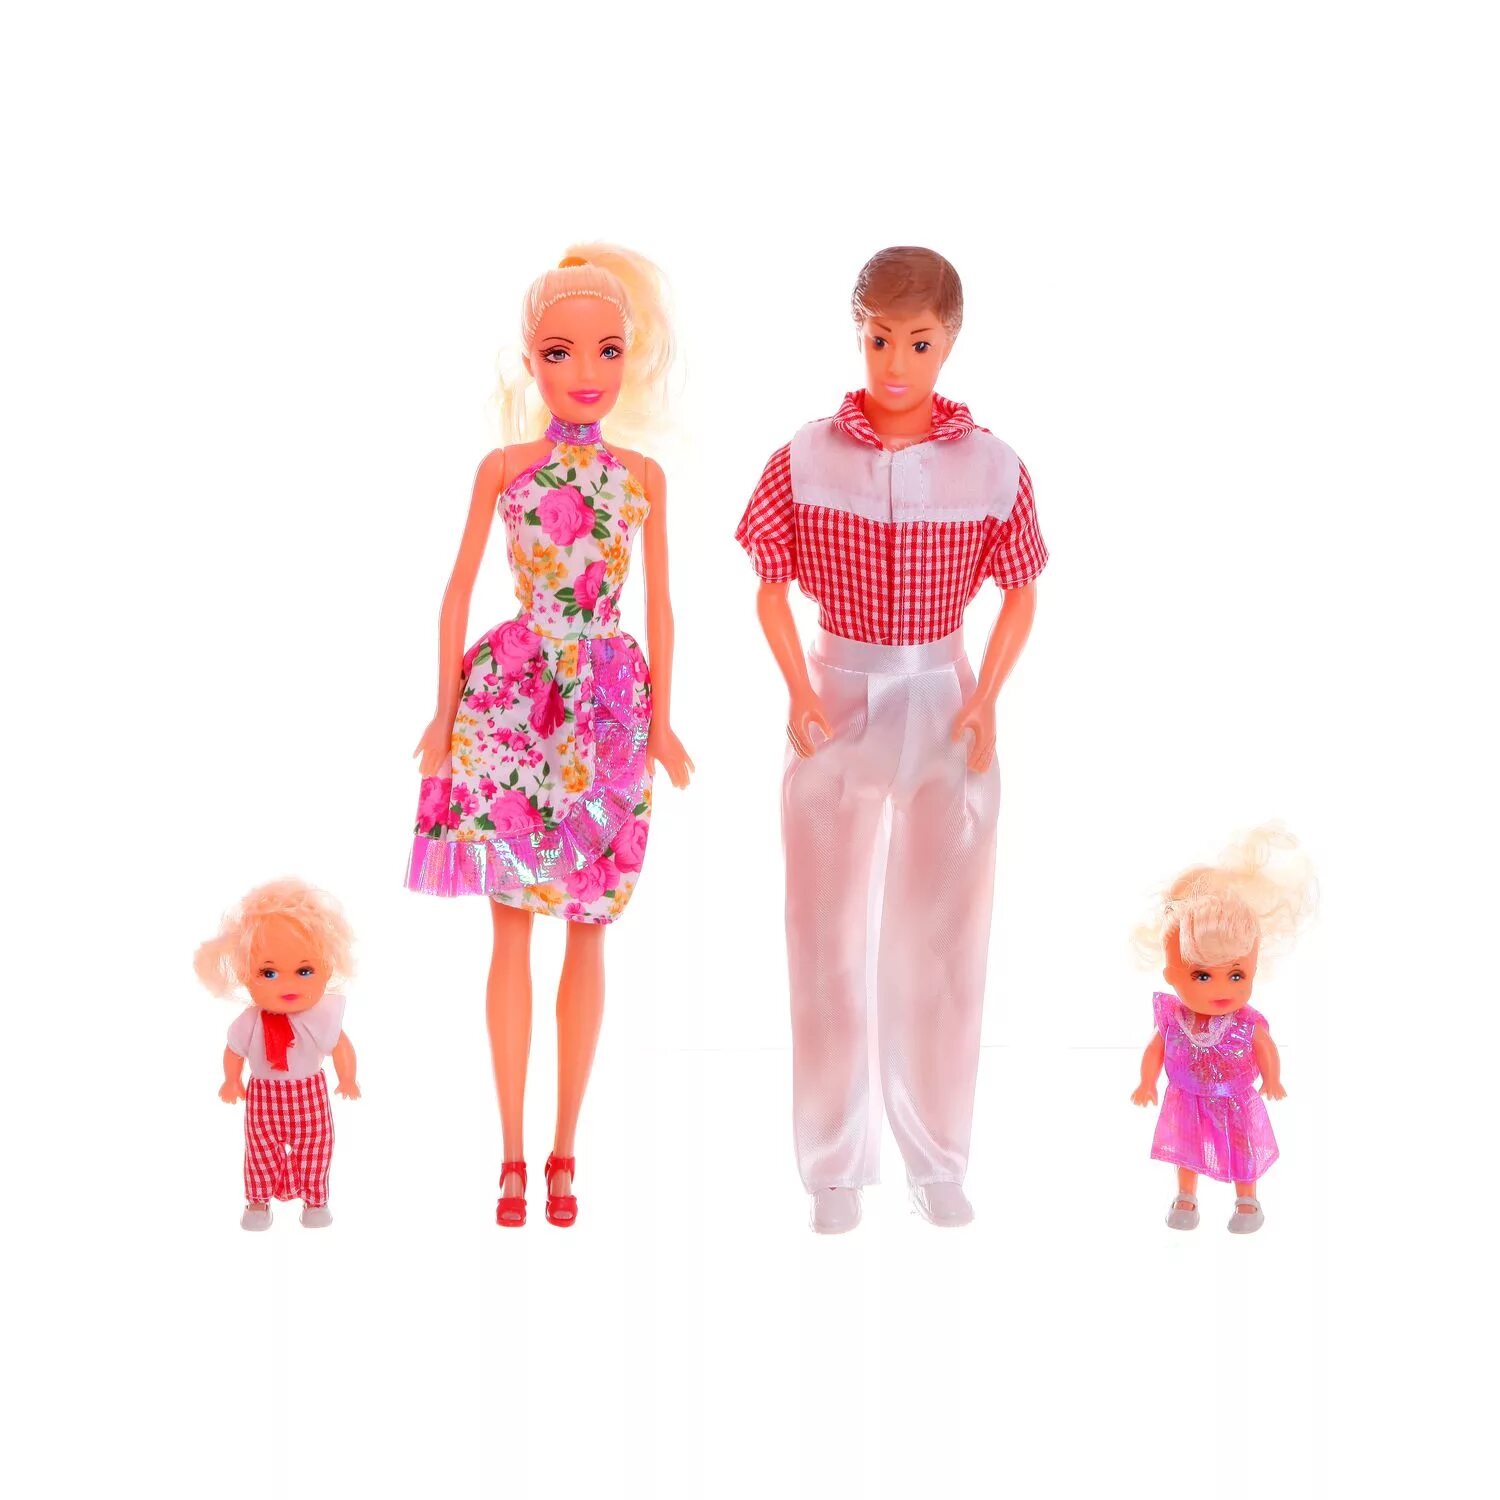 Кукла мама купить. Кукла мама. Набор кукол семья. Кукла папа и мама. Куклы Барби семья в наборе.